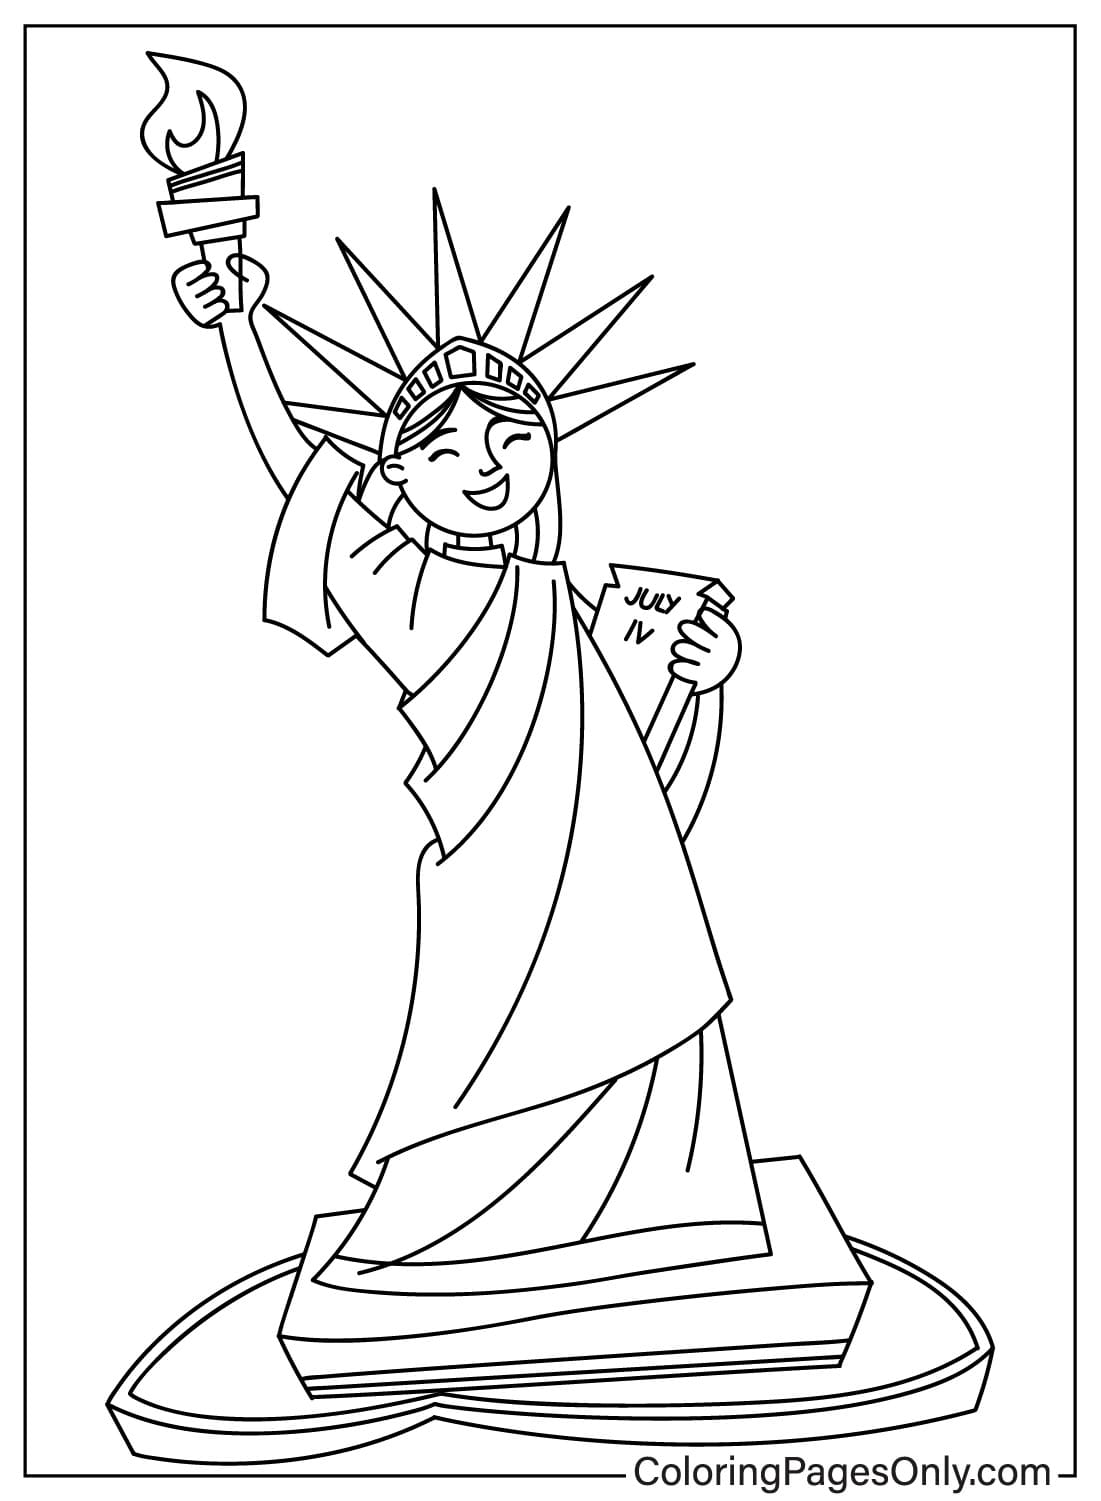 Dibujos para colorear de la Estatua de la Libertad para descargar desde la Estatua de la Libertad